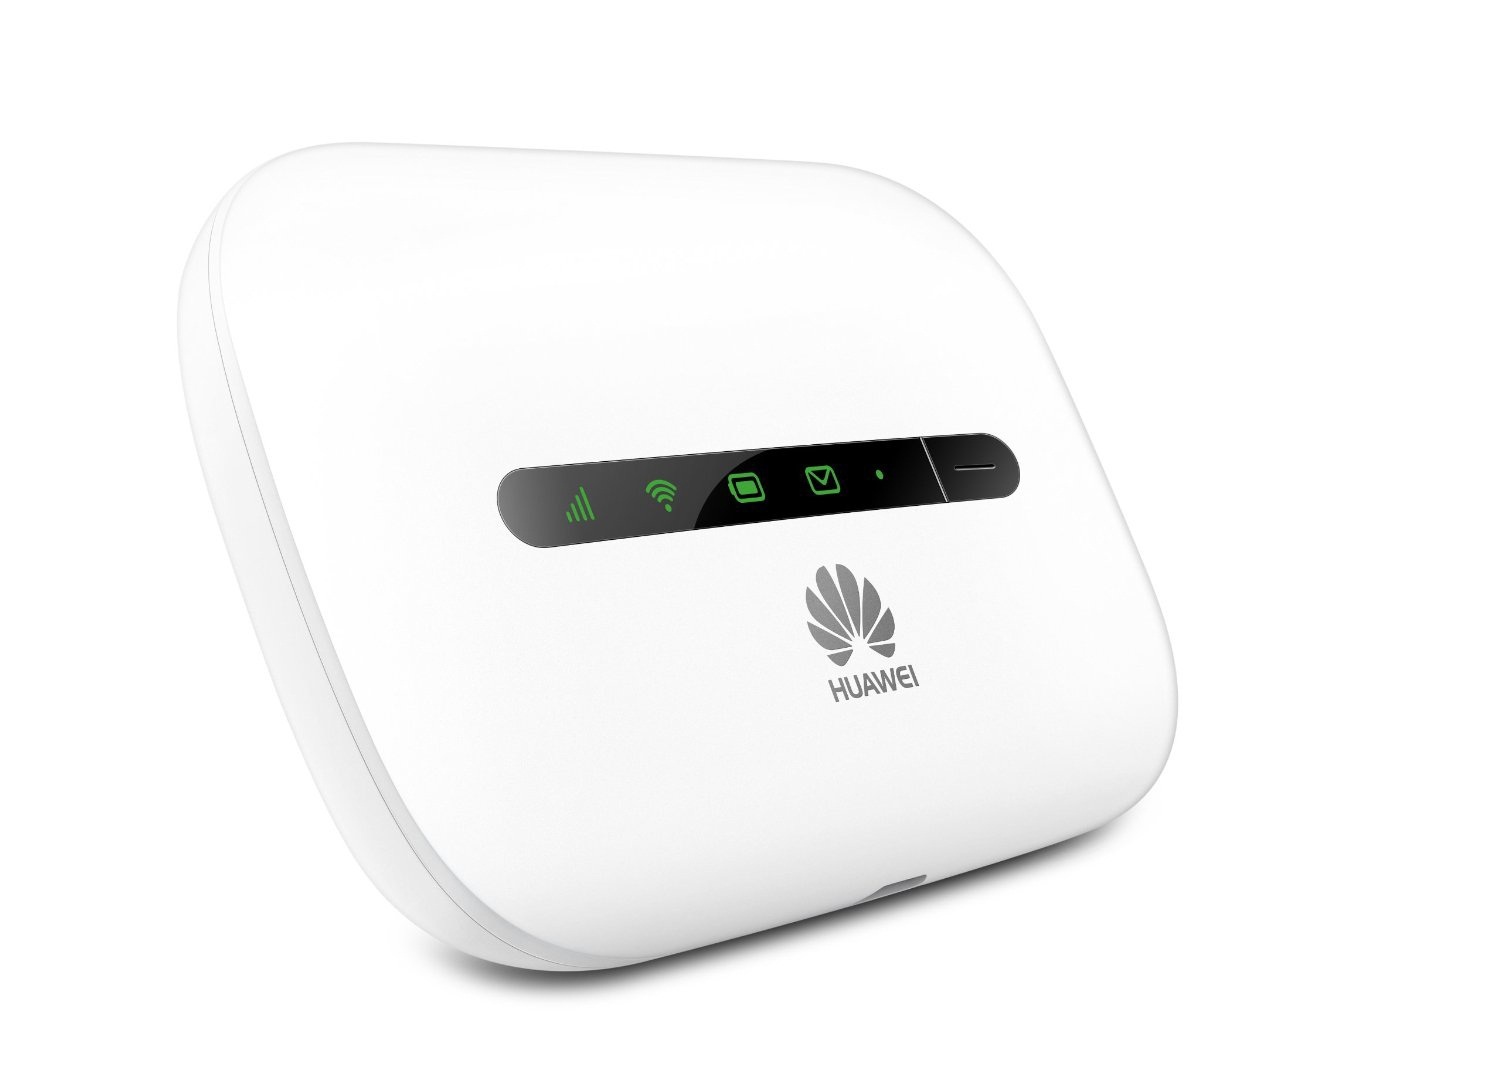 Bộ Phát WiFi từ Sim 3G 21.6Mbps - Huawei E5330